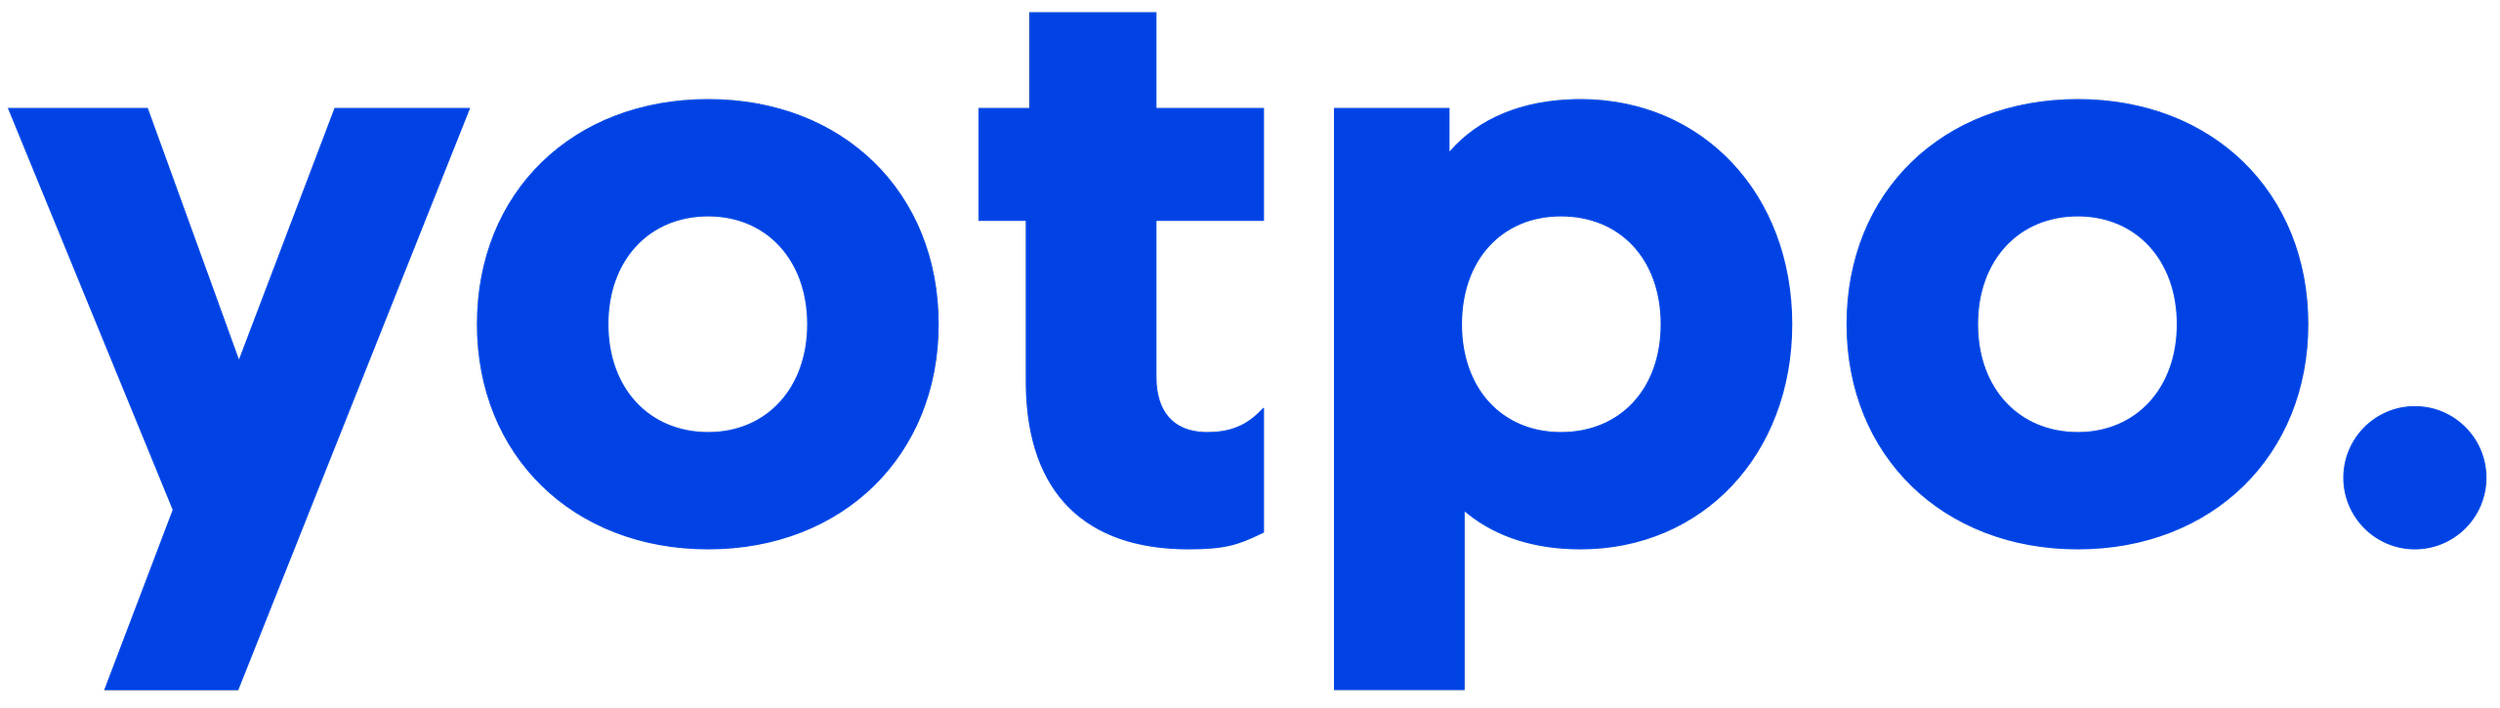 Yotpo-logo.svg.png